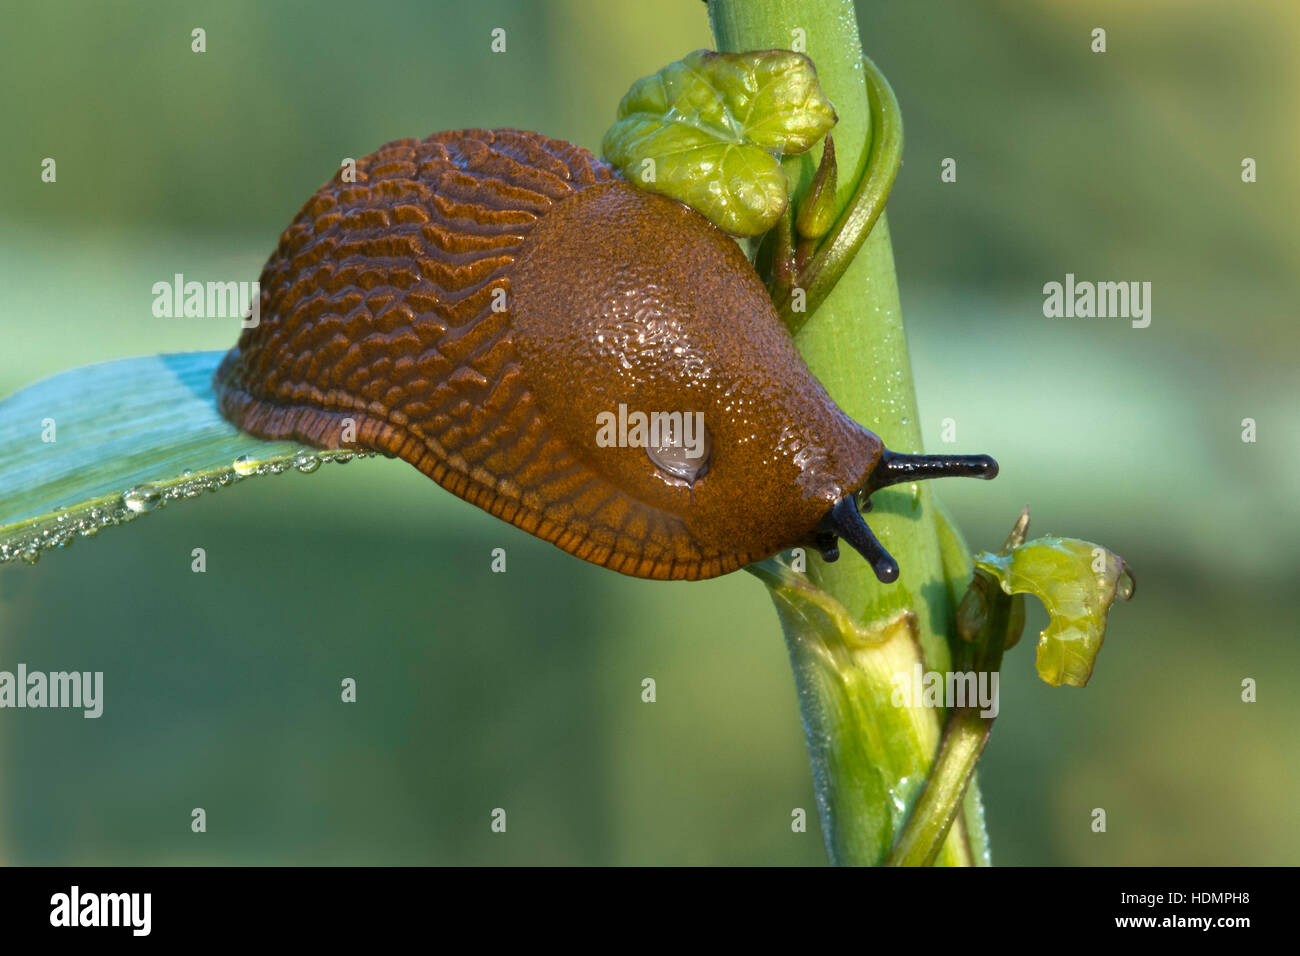 Spanish slug (Arion vulgaris), on plant, Burgenland, Austria Stock Photo